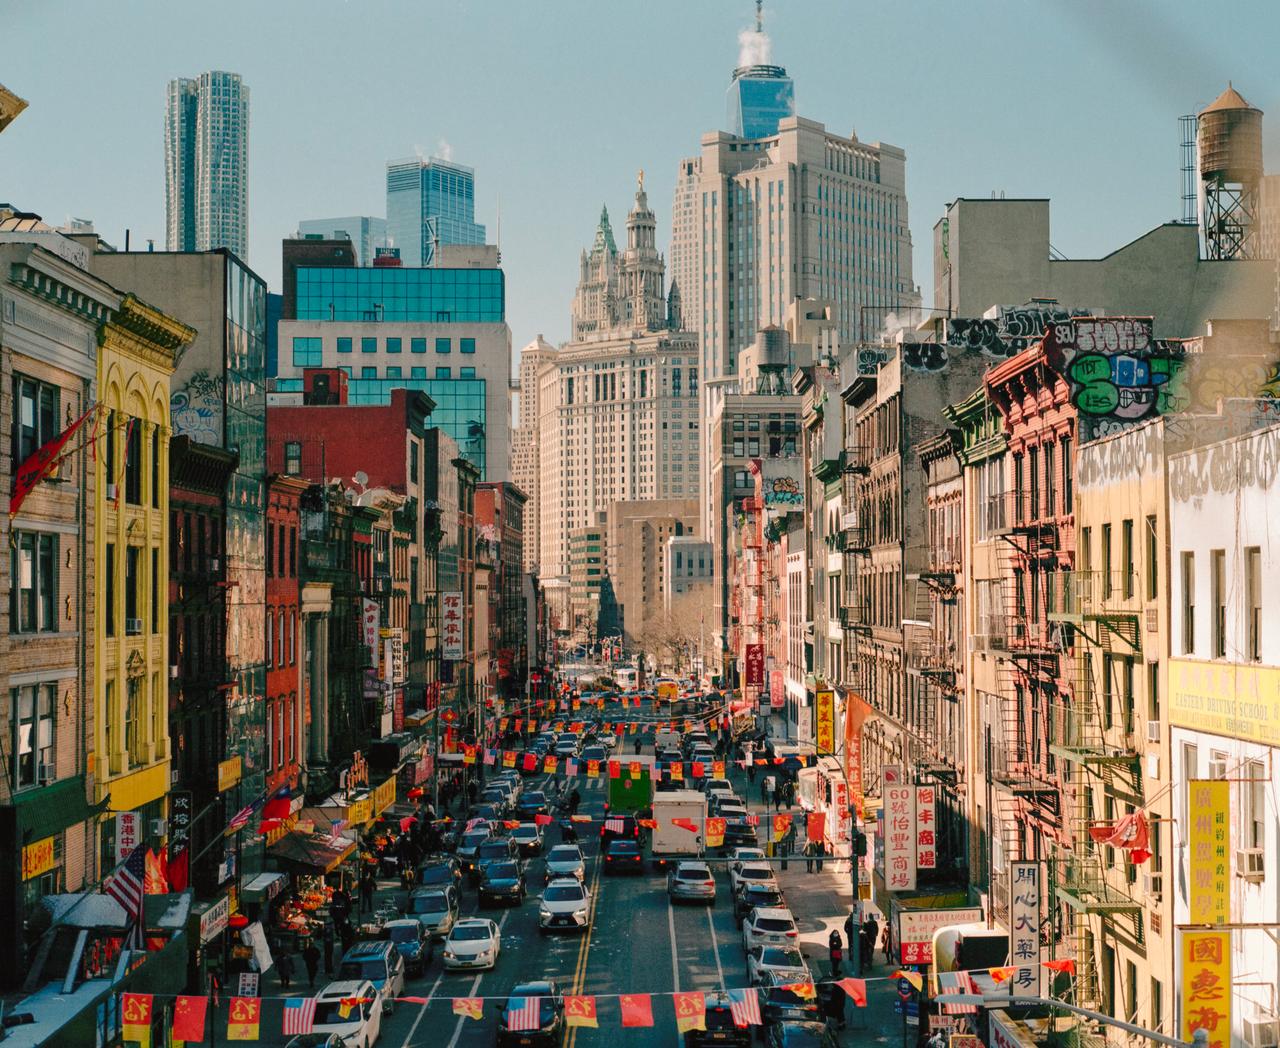 New York City captured on Kodak Gold 200 in 120 medium format by Nat Meir (@softboifilms).